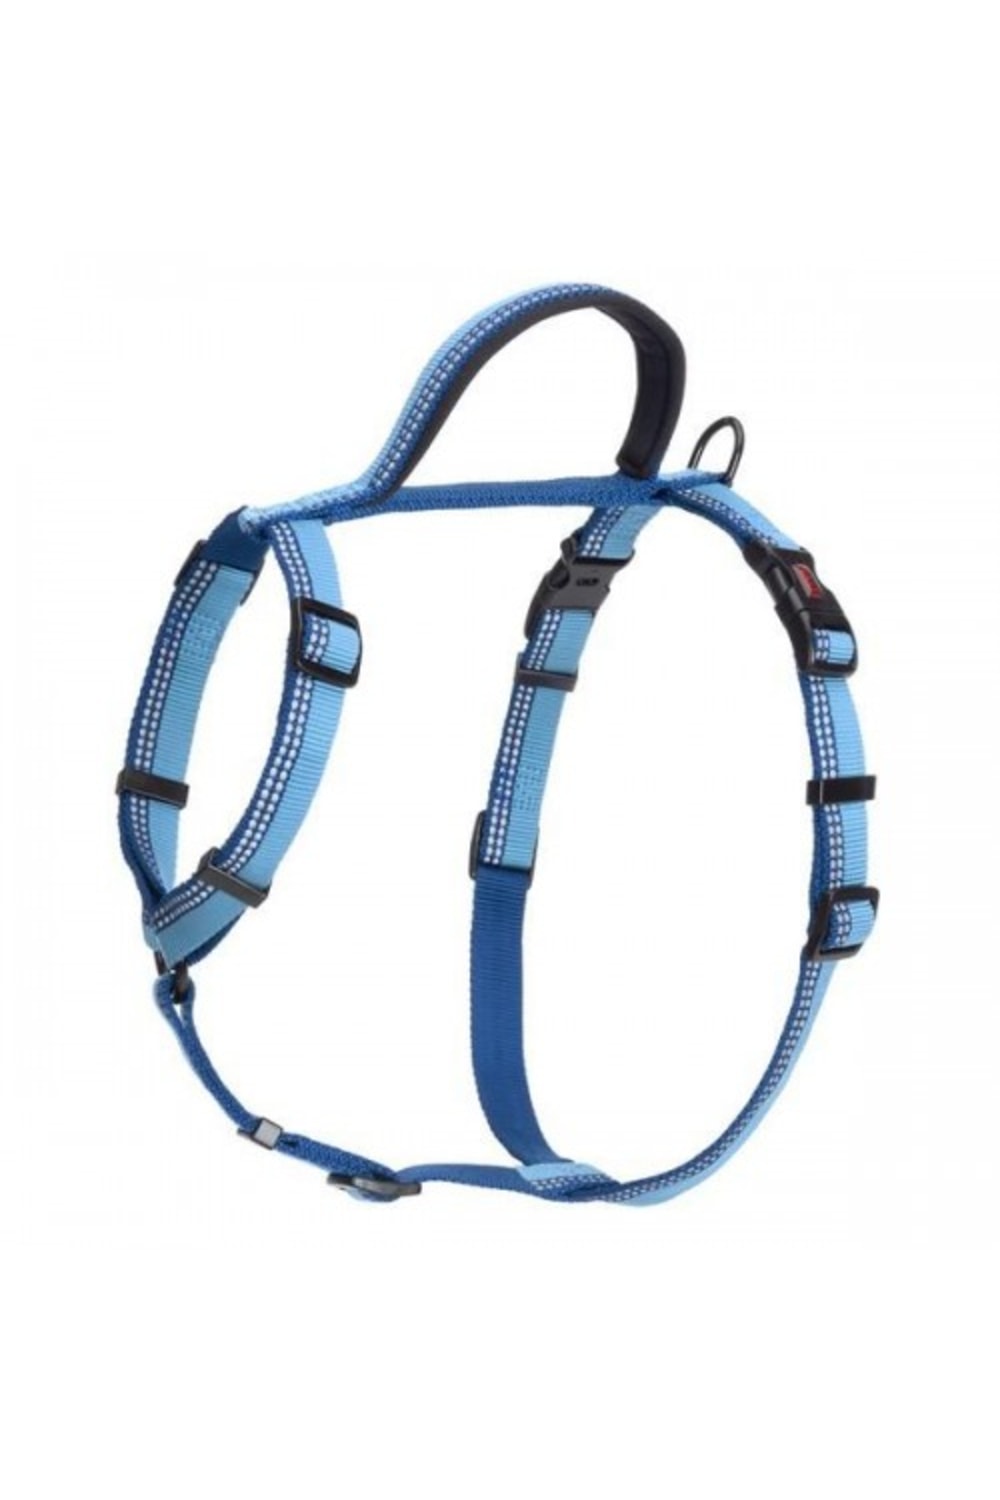 Company Of Animals Halti Walking Dog Harness (Blue) (XS)